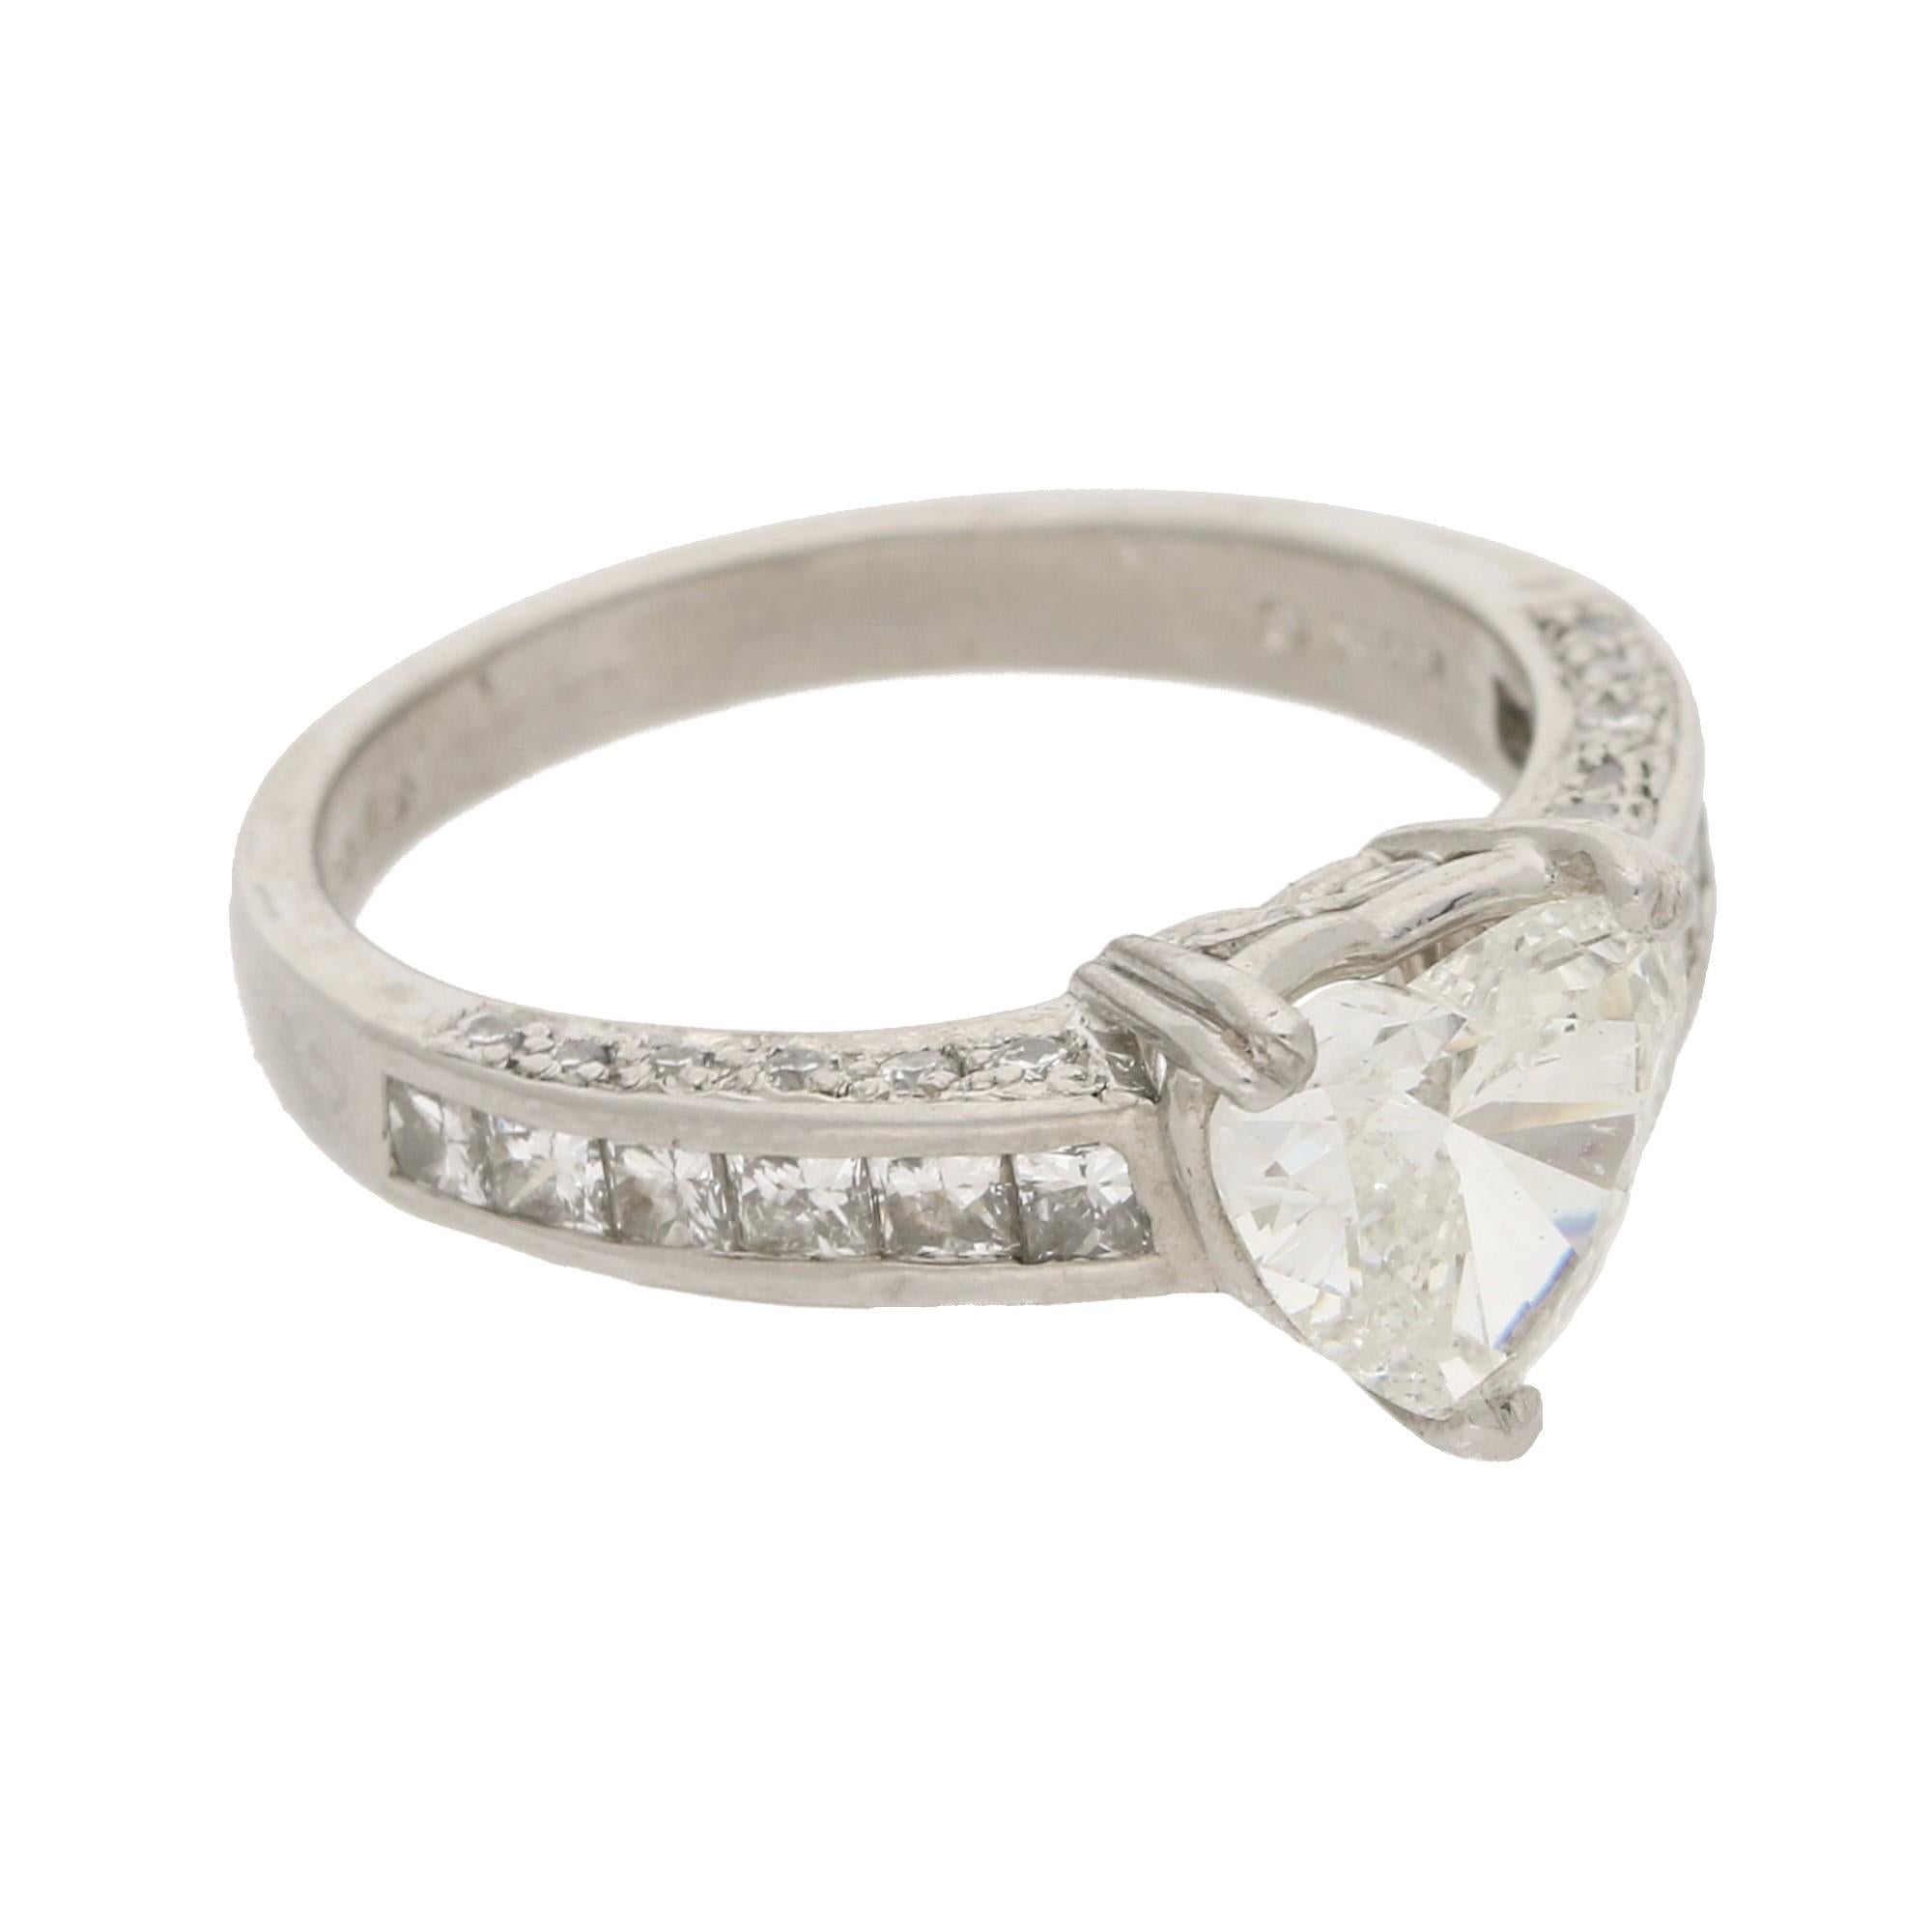 Retro Heart and Princess Cut Diamond Engagement Ring Set in Platinum